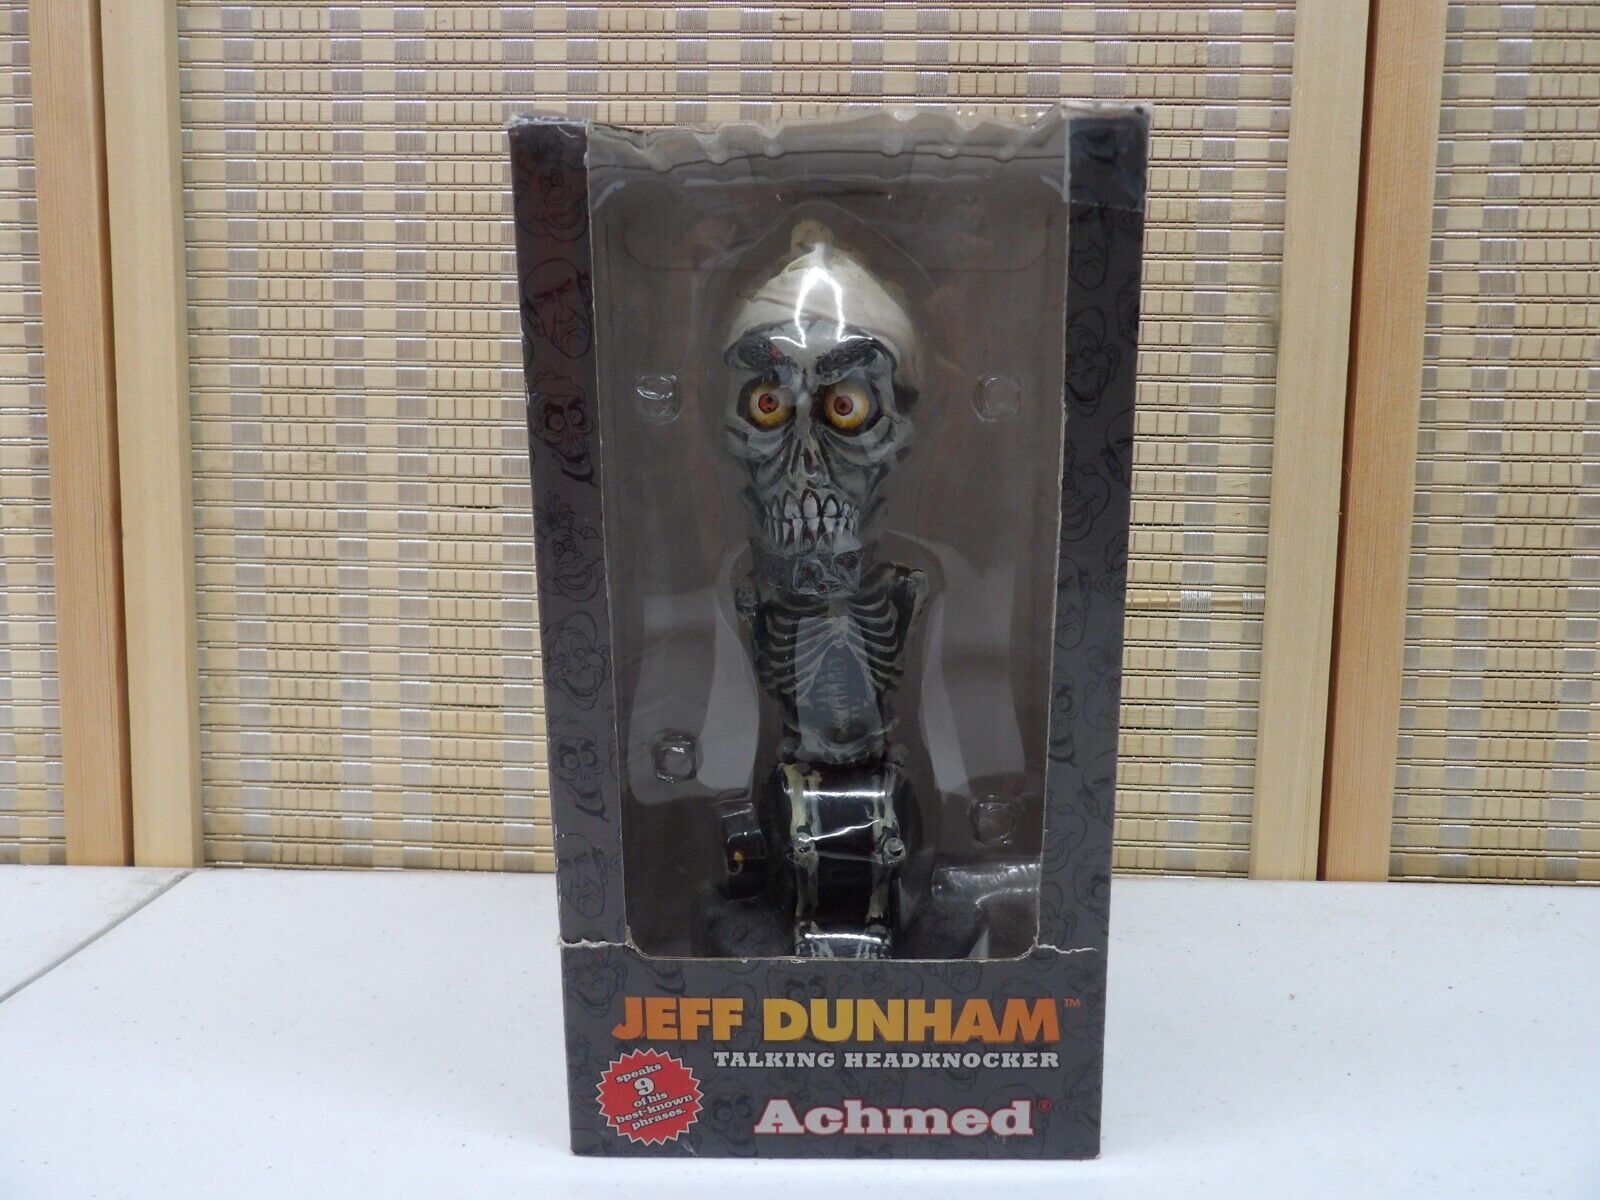 Jeff Dunham NECA Achmed Talking Head Knocker Bobble Head Collectible Works